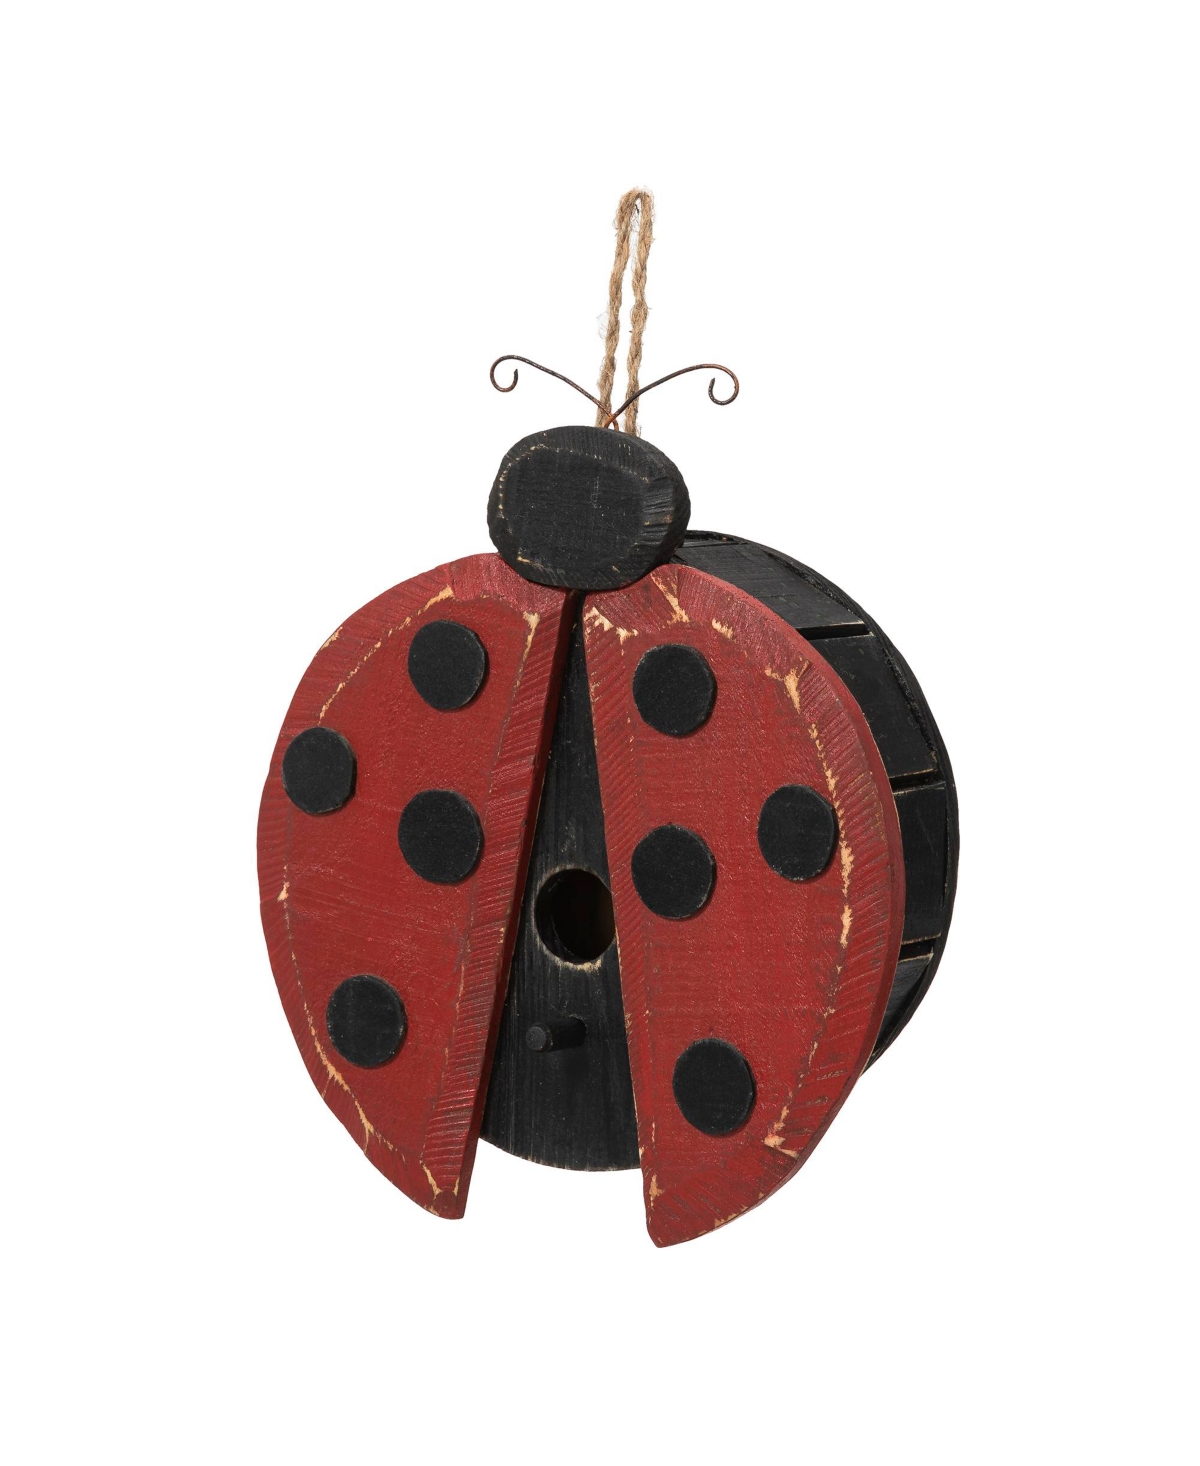 11.5" H Distressed Solid Wood Ladybug Birdhouse - Red